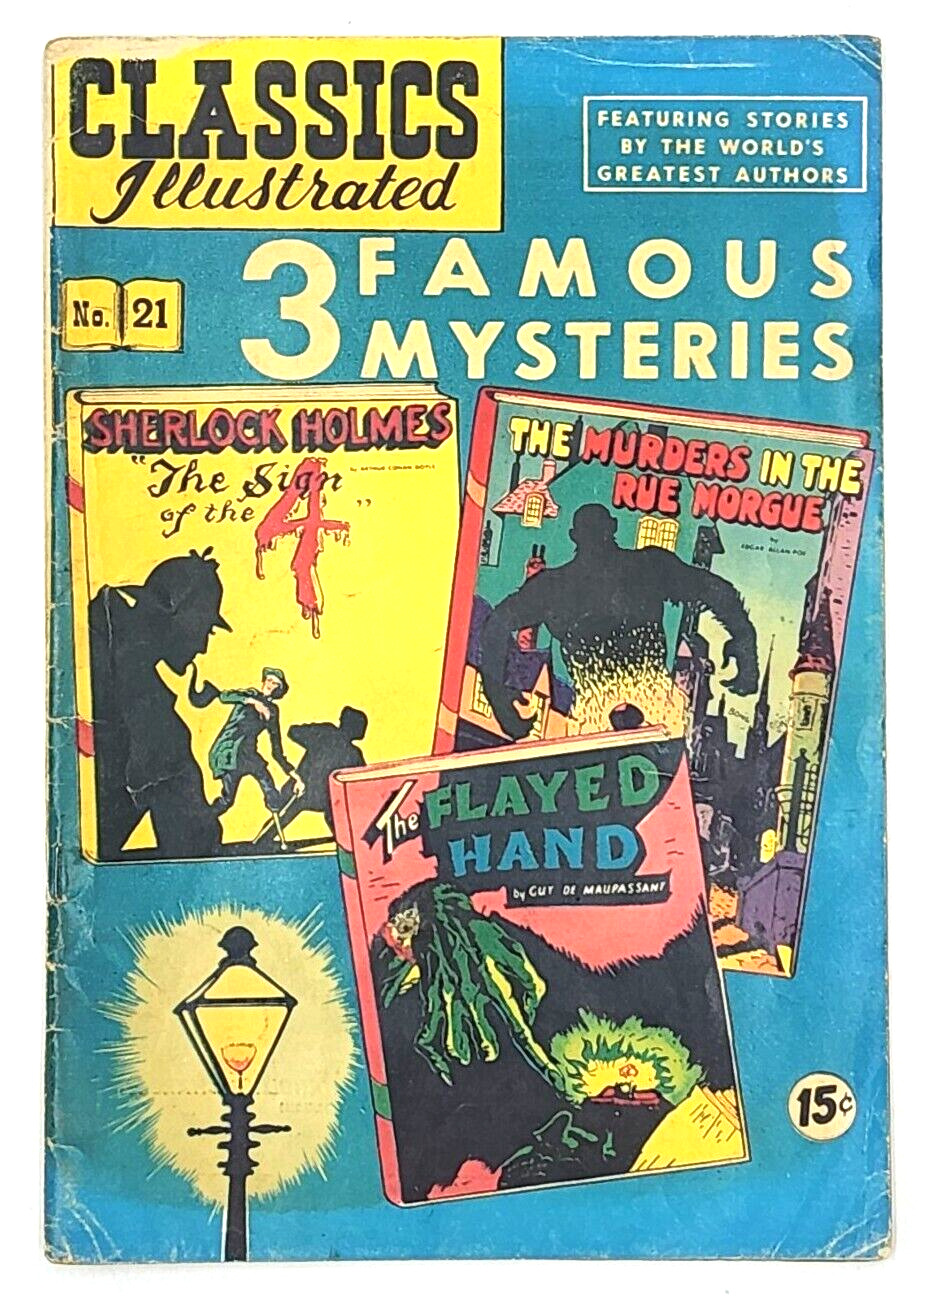 CLASSICS ILLUSTRATED #21 3 Famous Mysteries Sherlock Holmes (HRN 85) 1945 GOOD